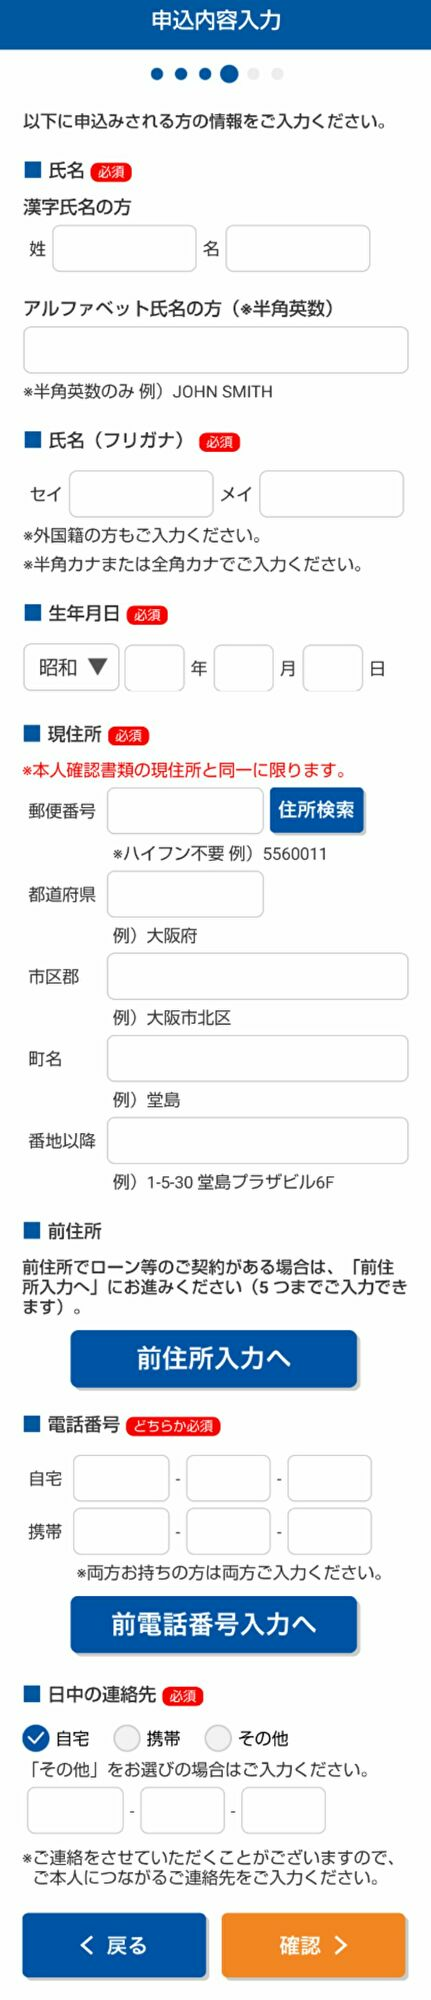 JICCスマートフォン開示受付サービス申込内容入力画面